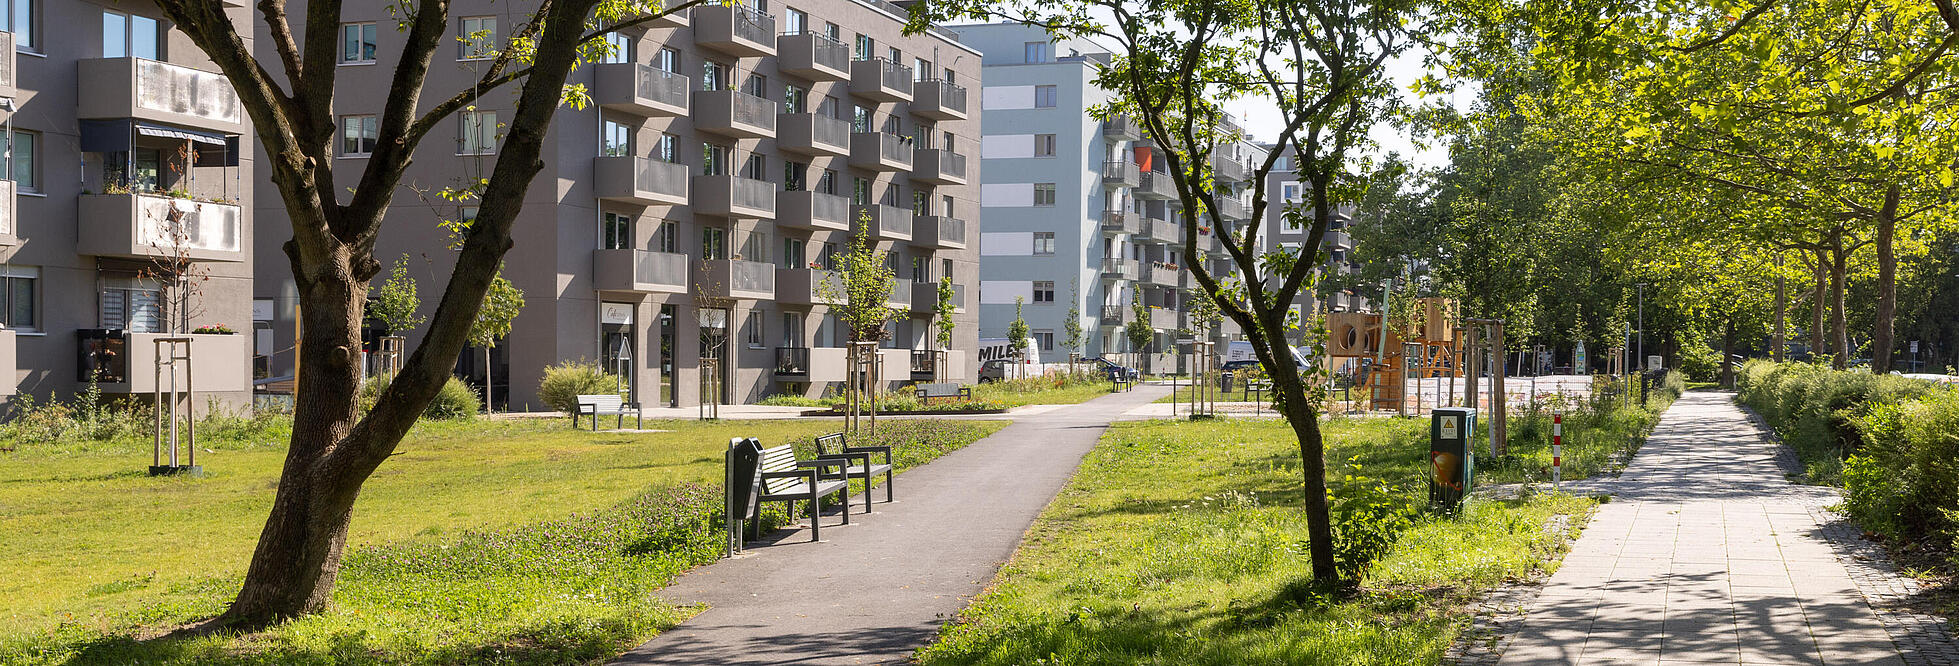 Stadtpark im Quartier Stadtgut Hellersdorf: Grünfläche umgeben von Bäumen